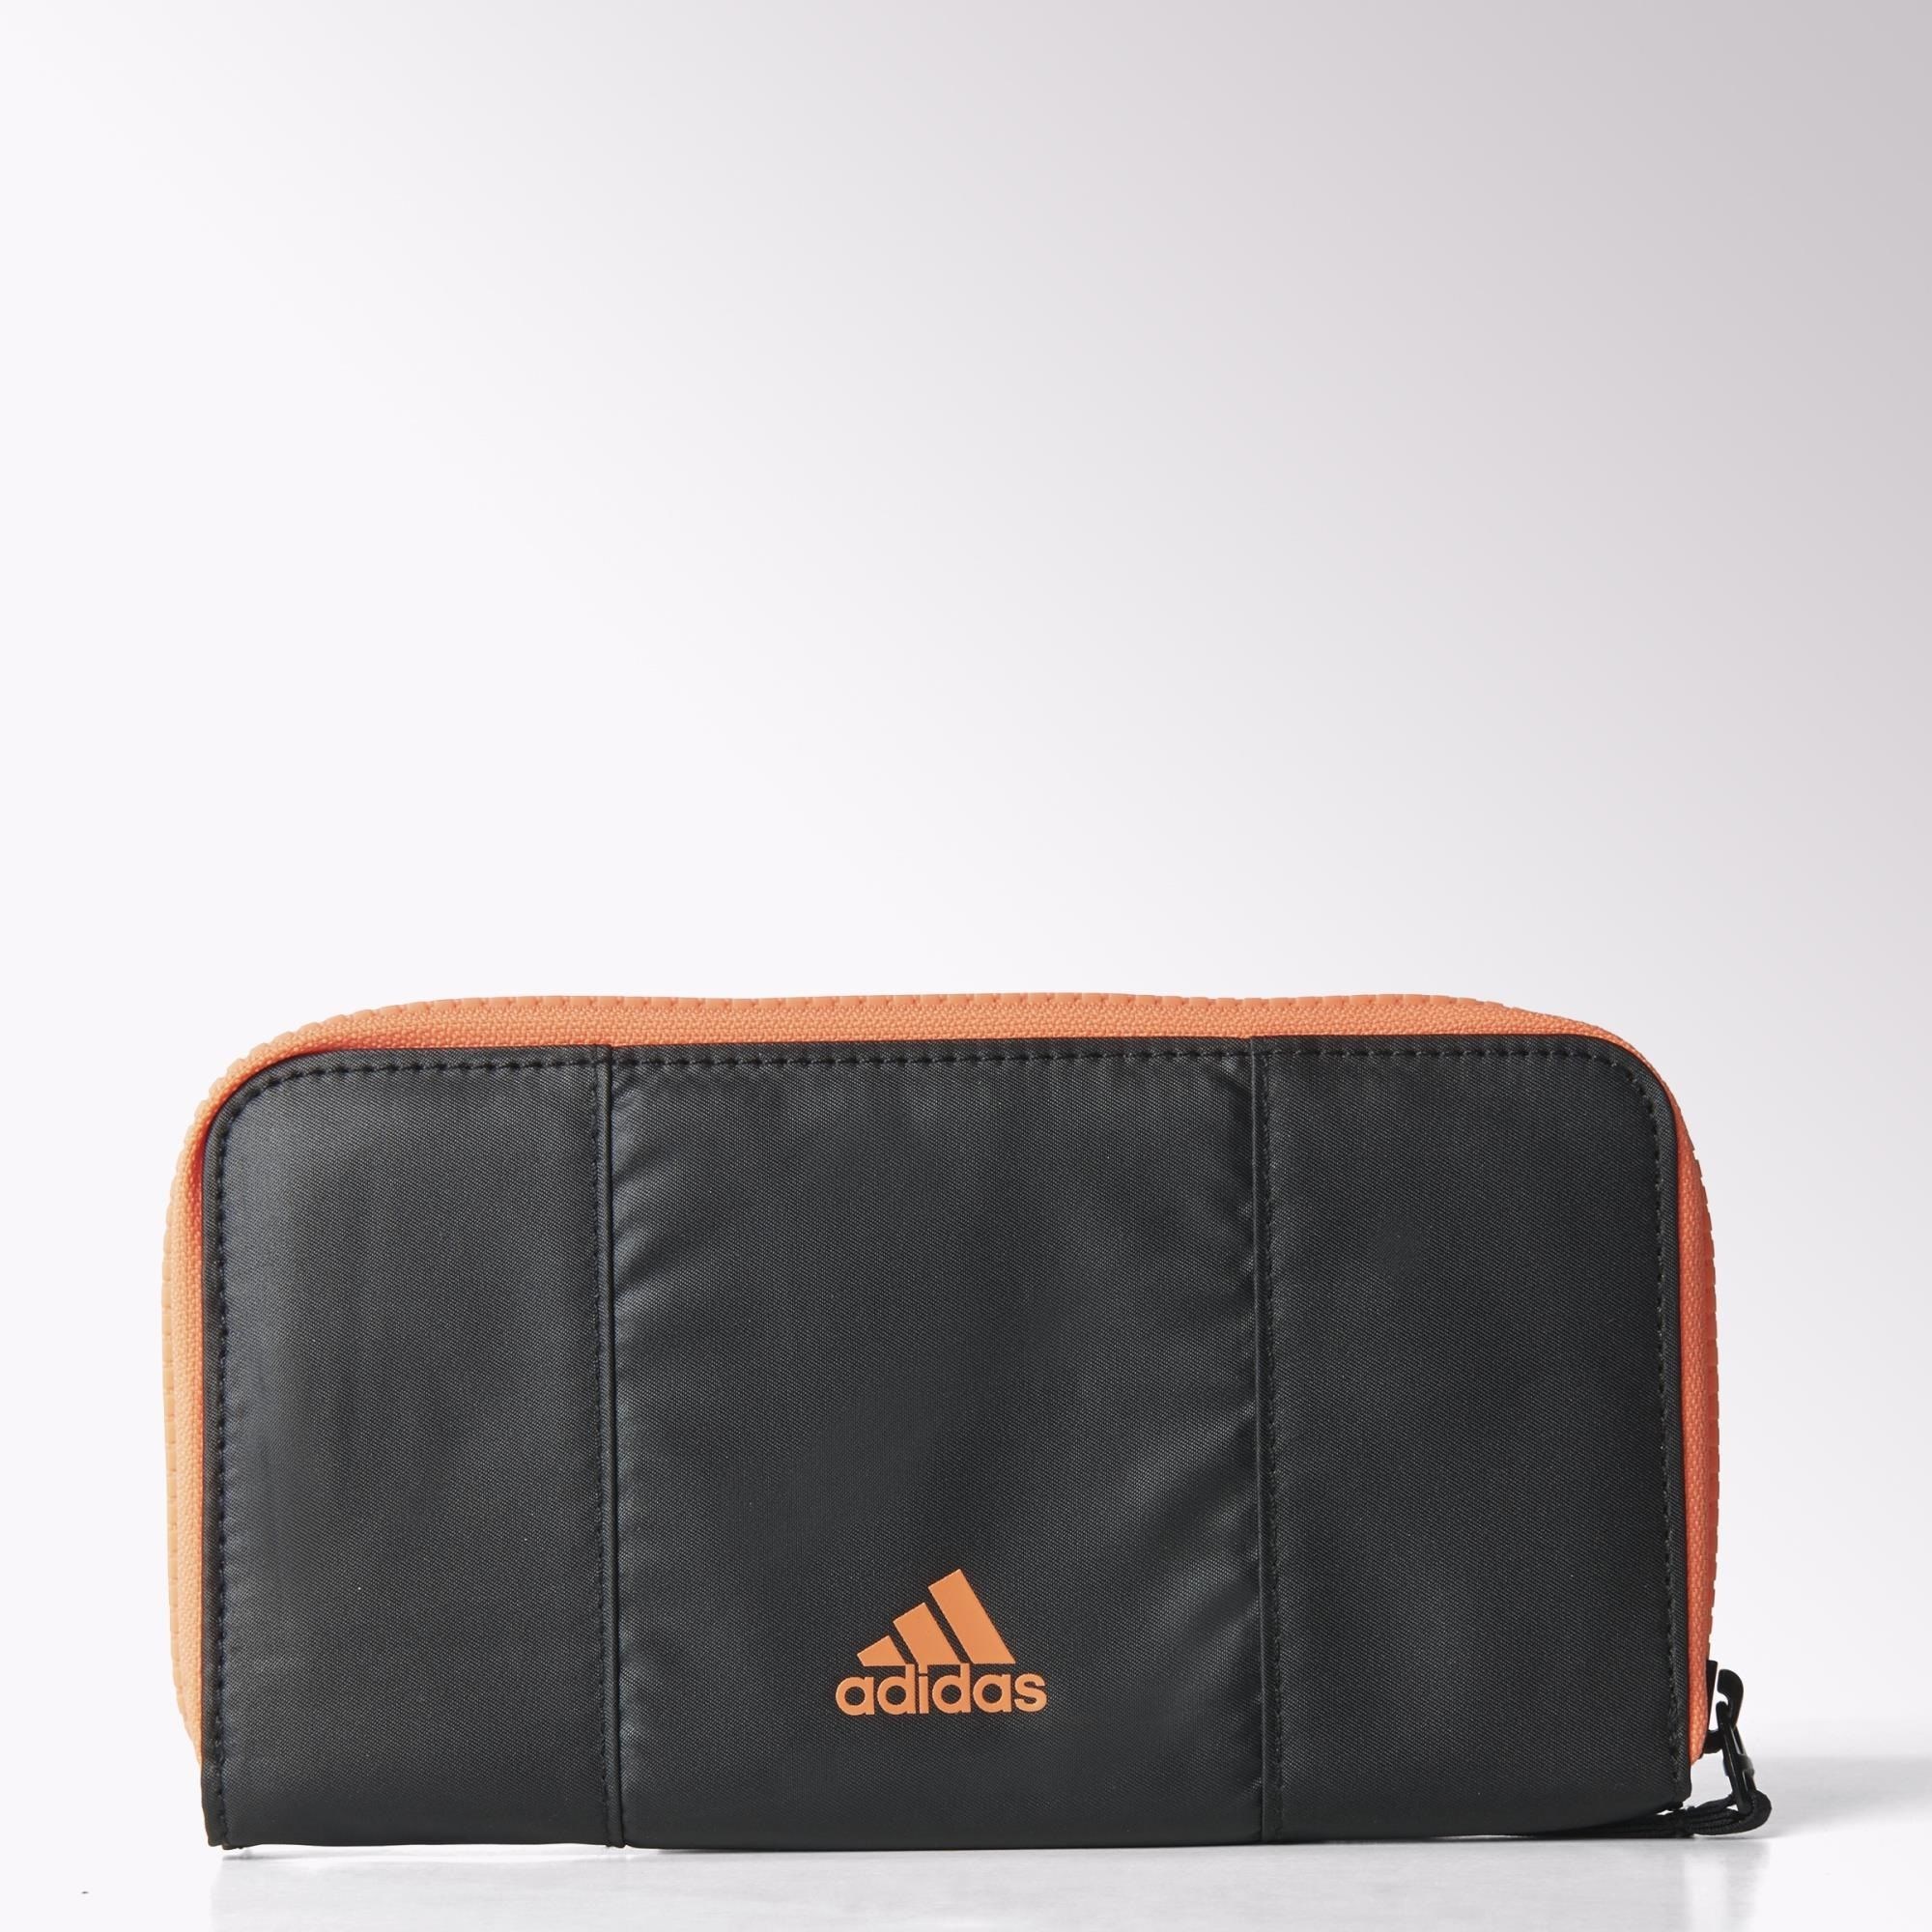 adidas W Performance Wallet Bayan Cüzdan Ürün kodu: S21703 | Etichet Sport